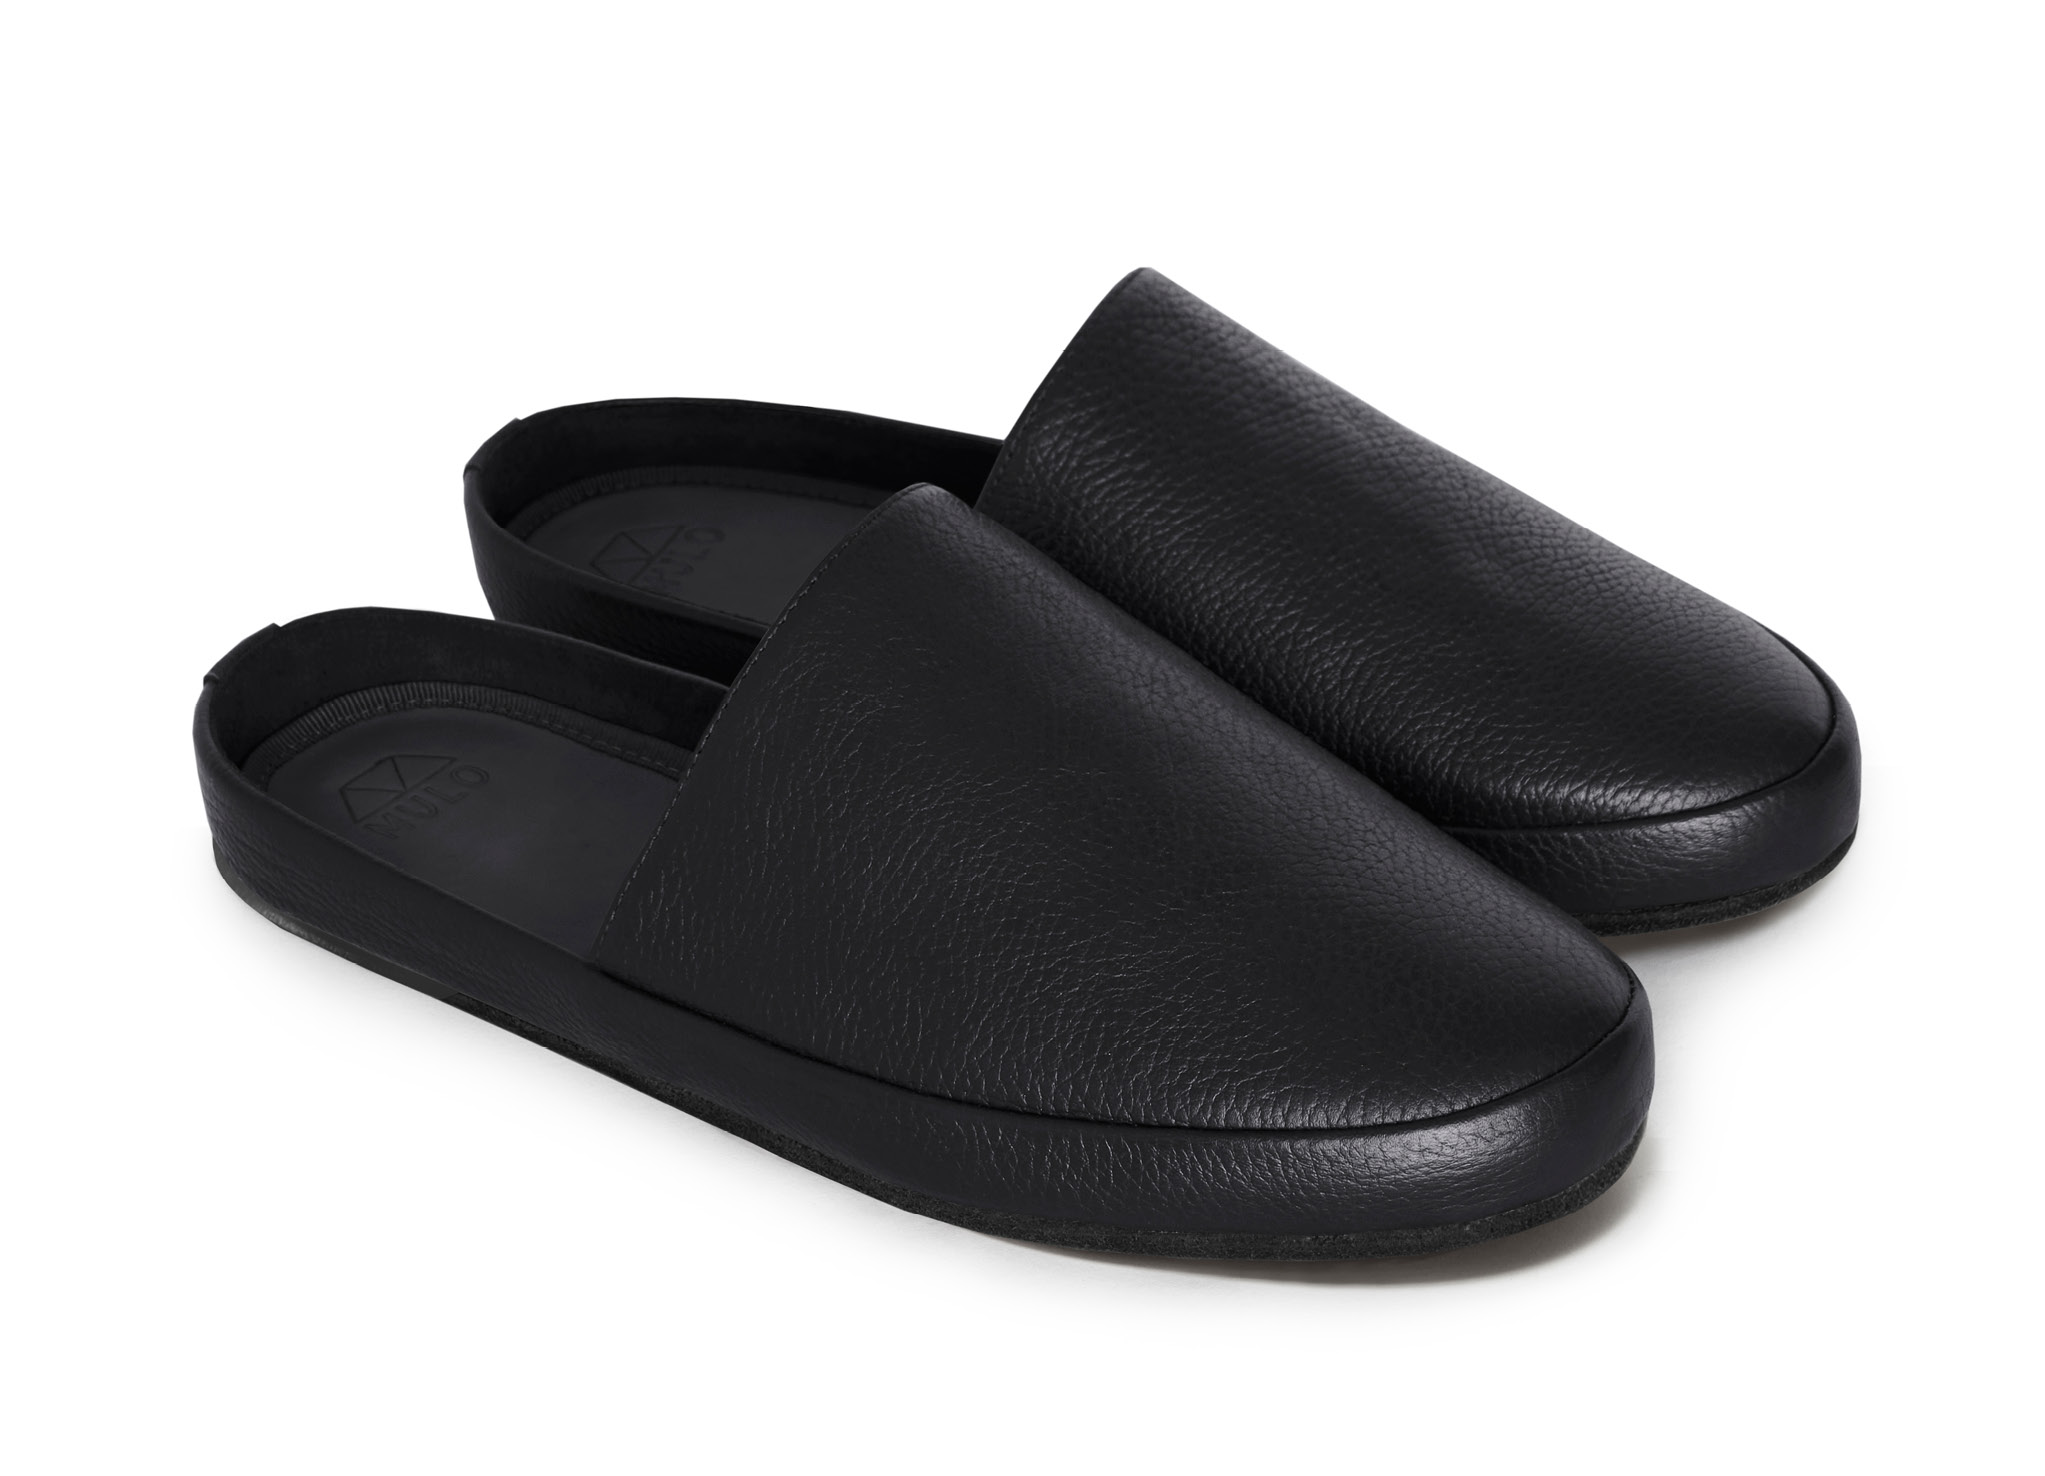 Black Leather Slippers | MULO shoes | Premium Italian Leather